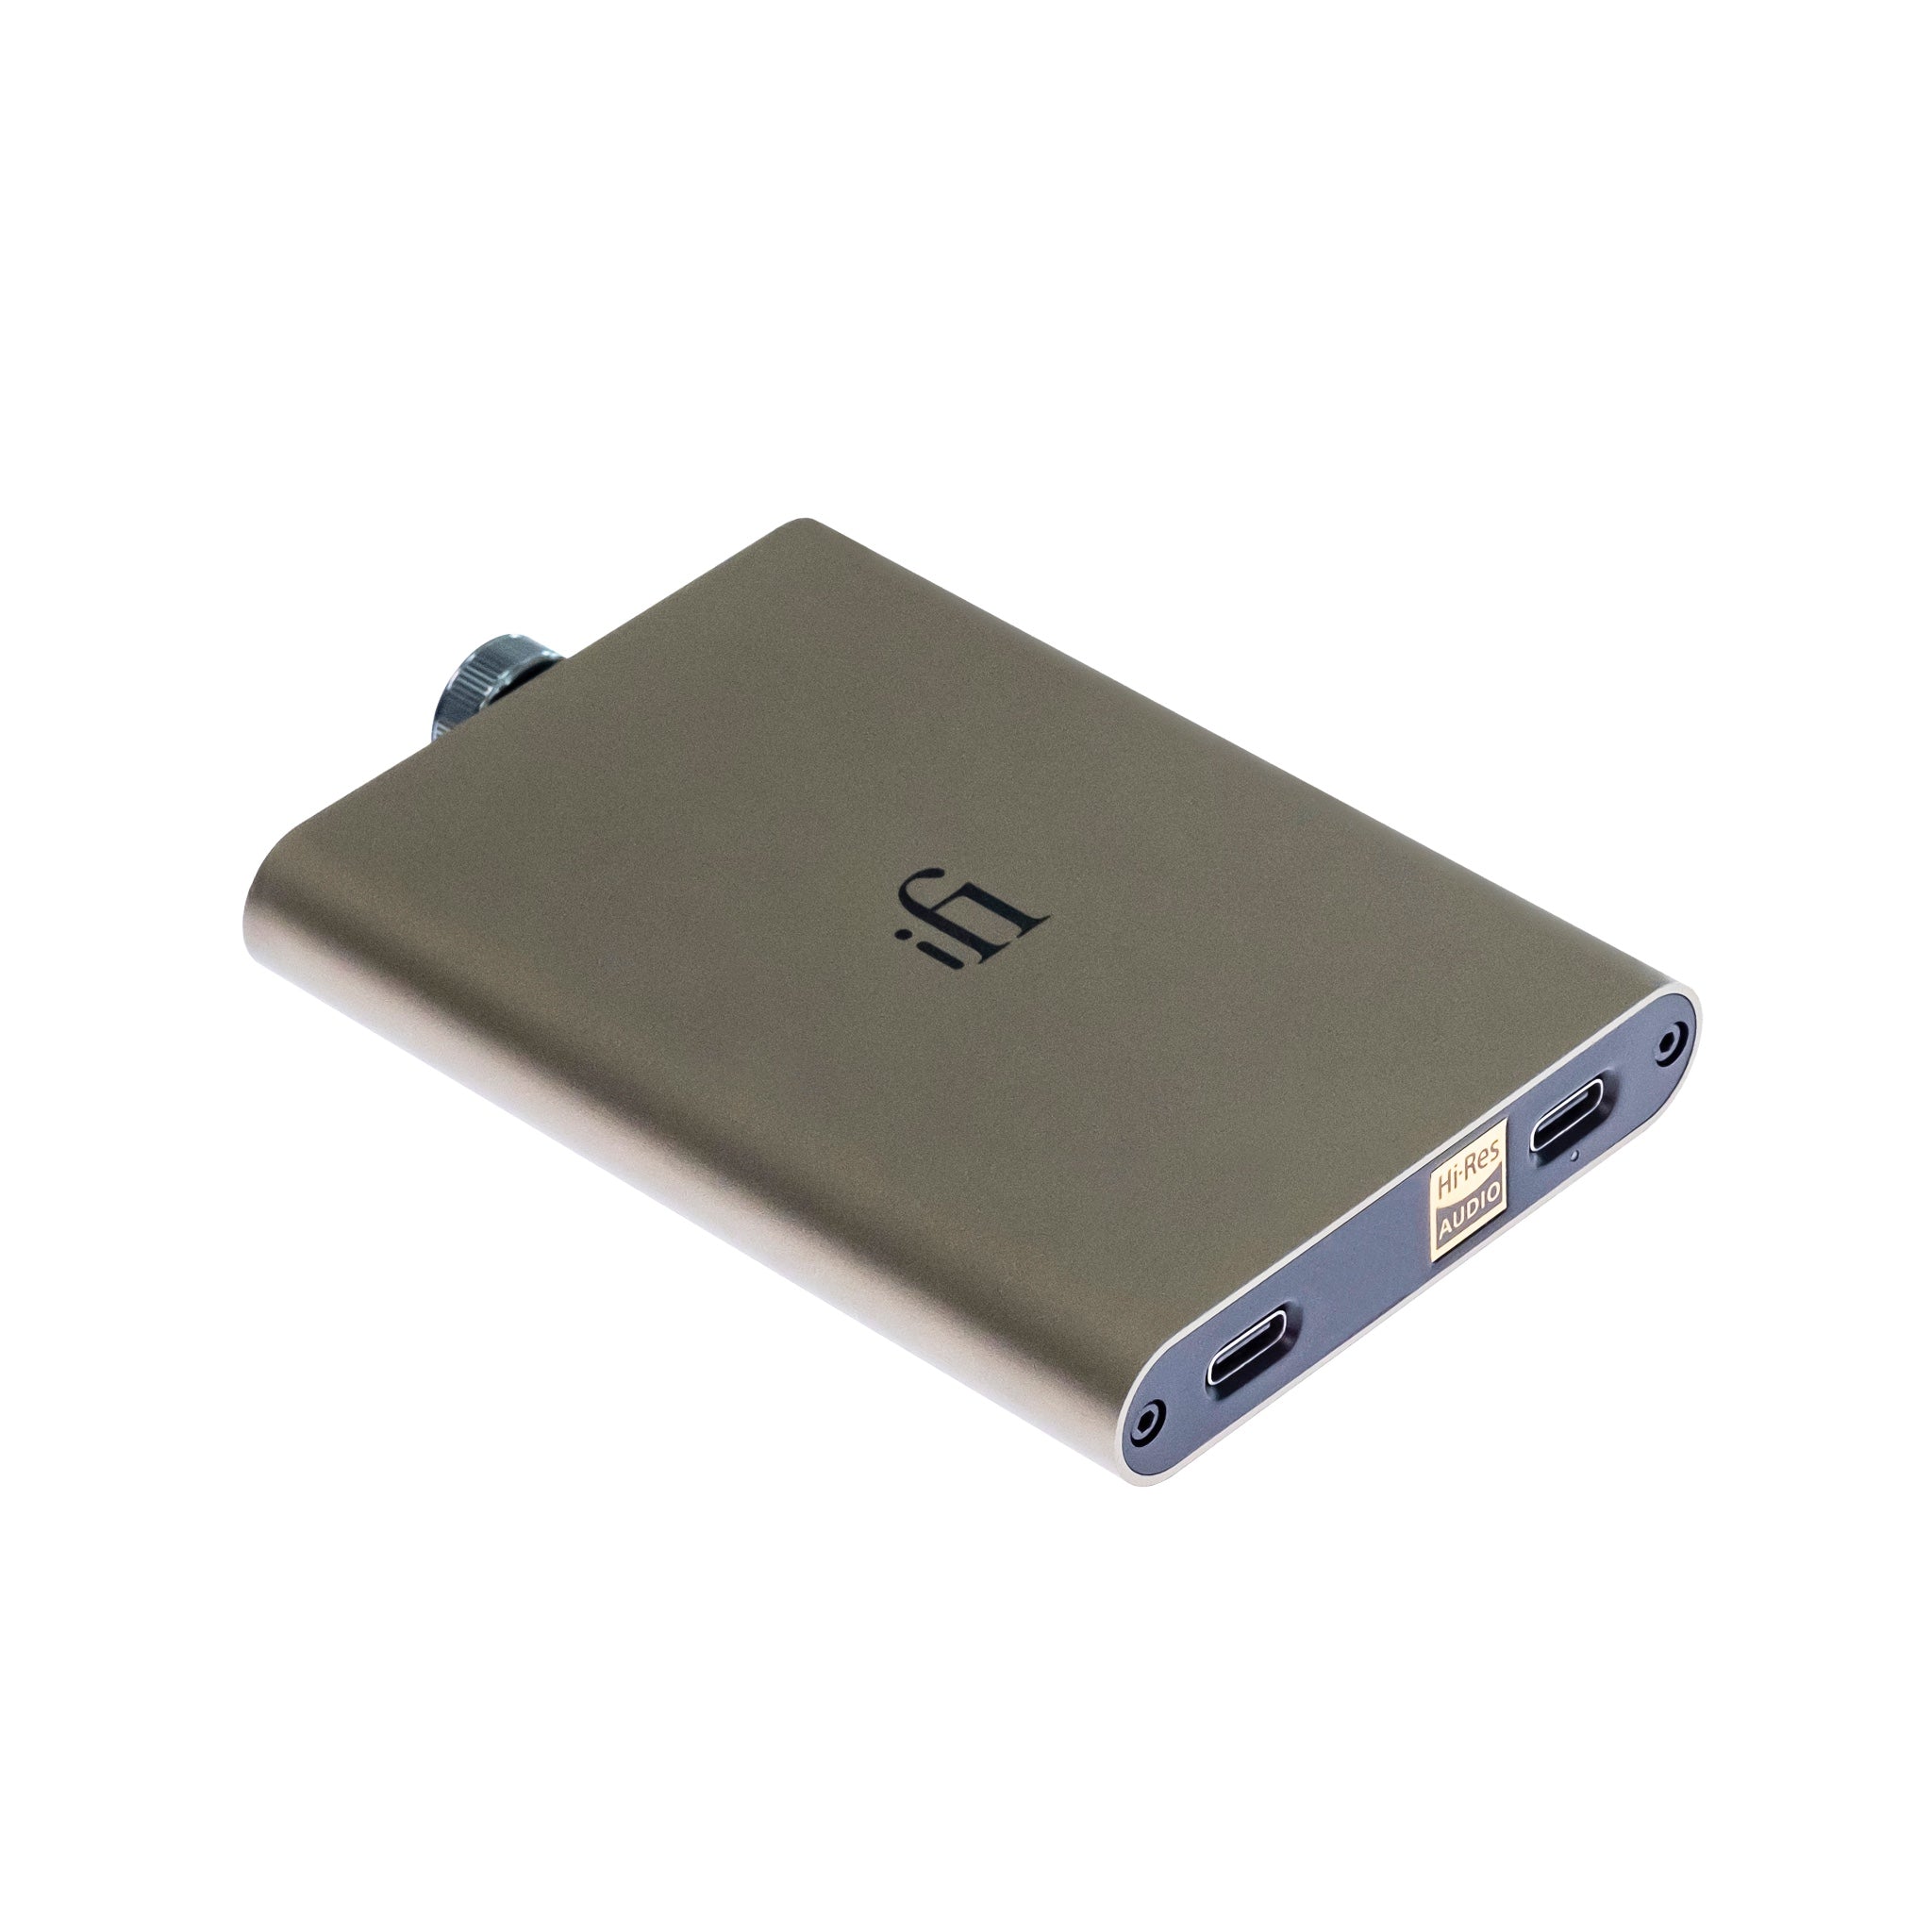 iFi hip-dac 3 Portable DAC and Amp | Bloom Audio